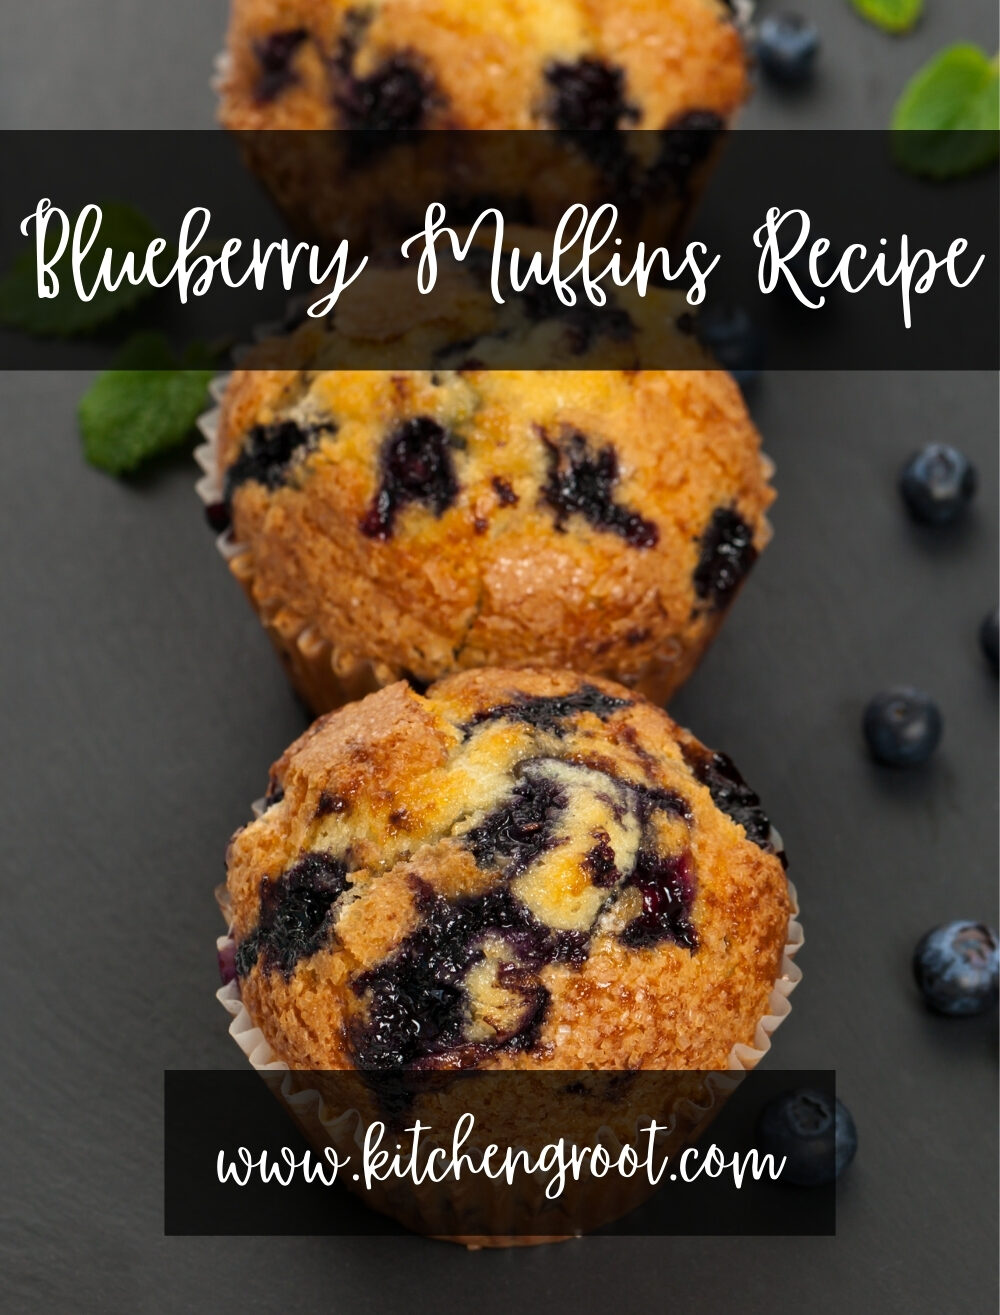 Blueberry Muffins Recipe | Kitchengroot